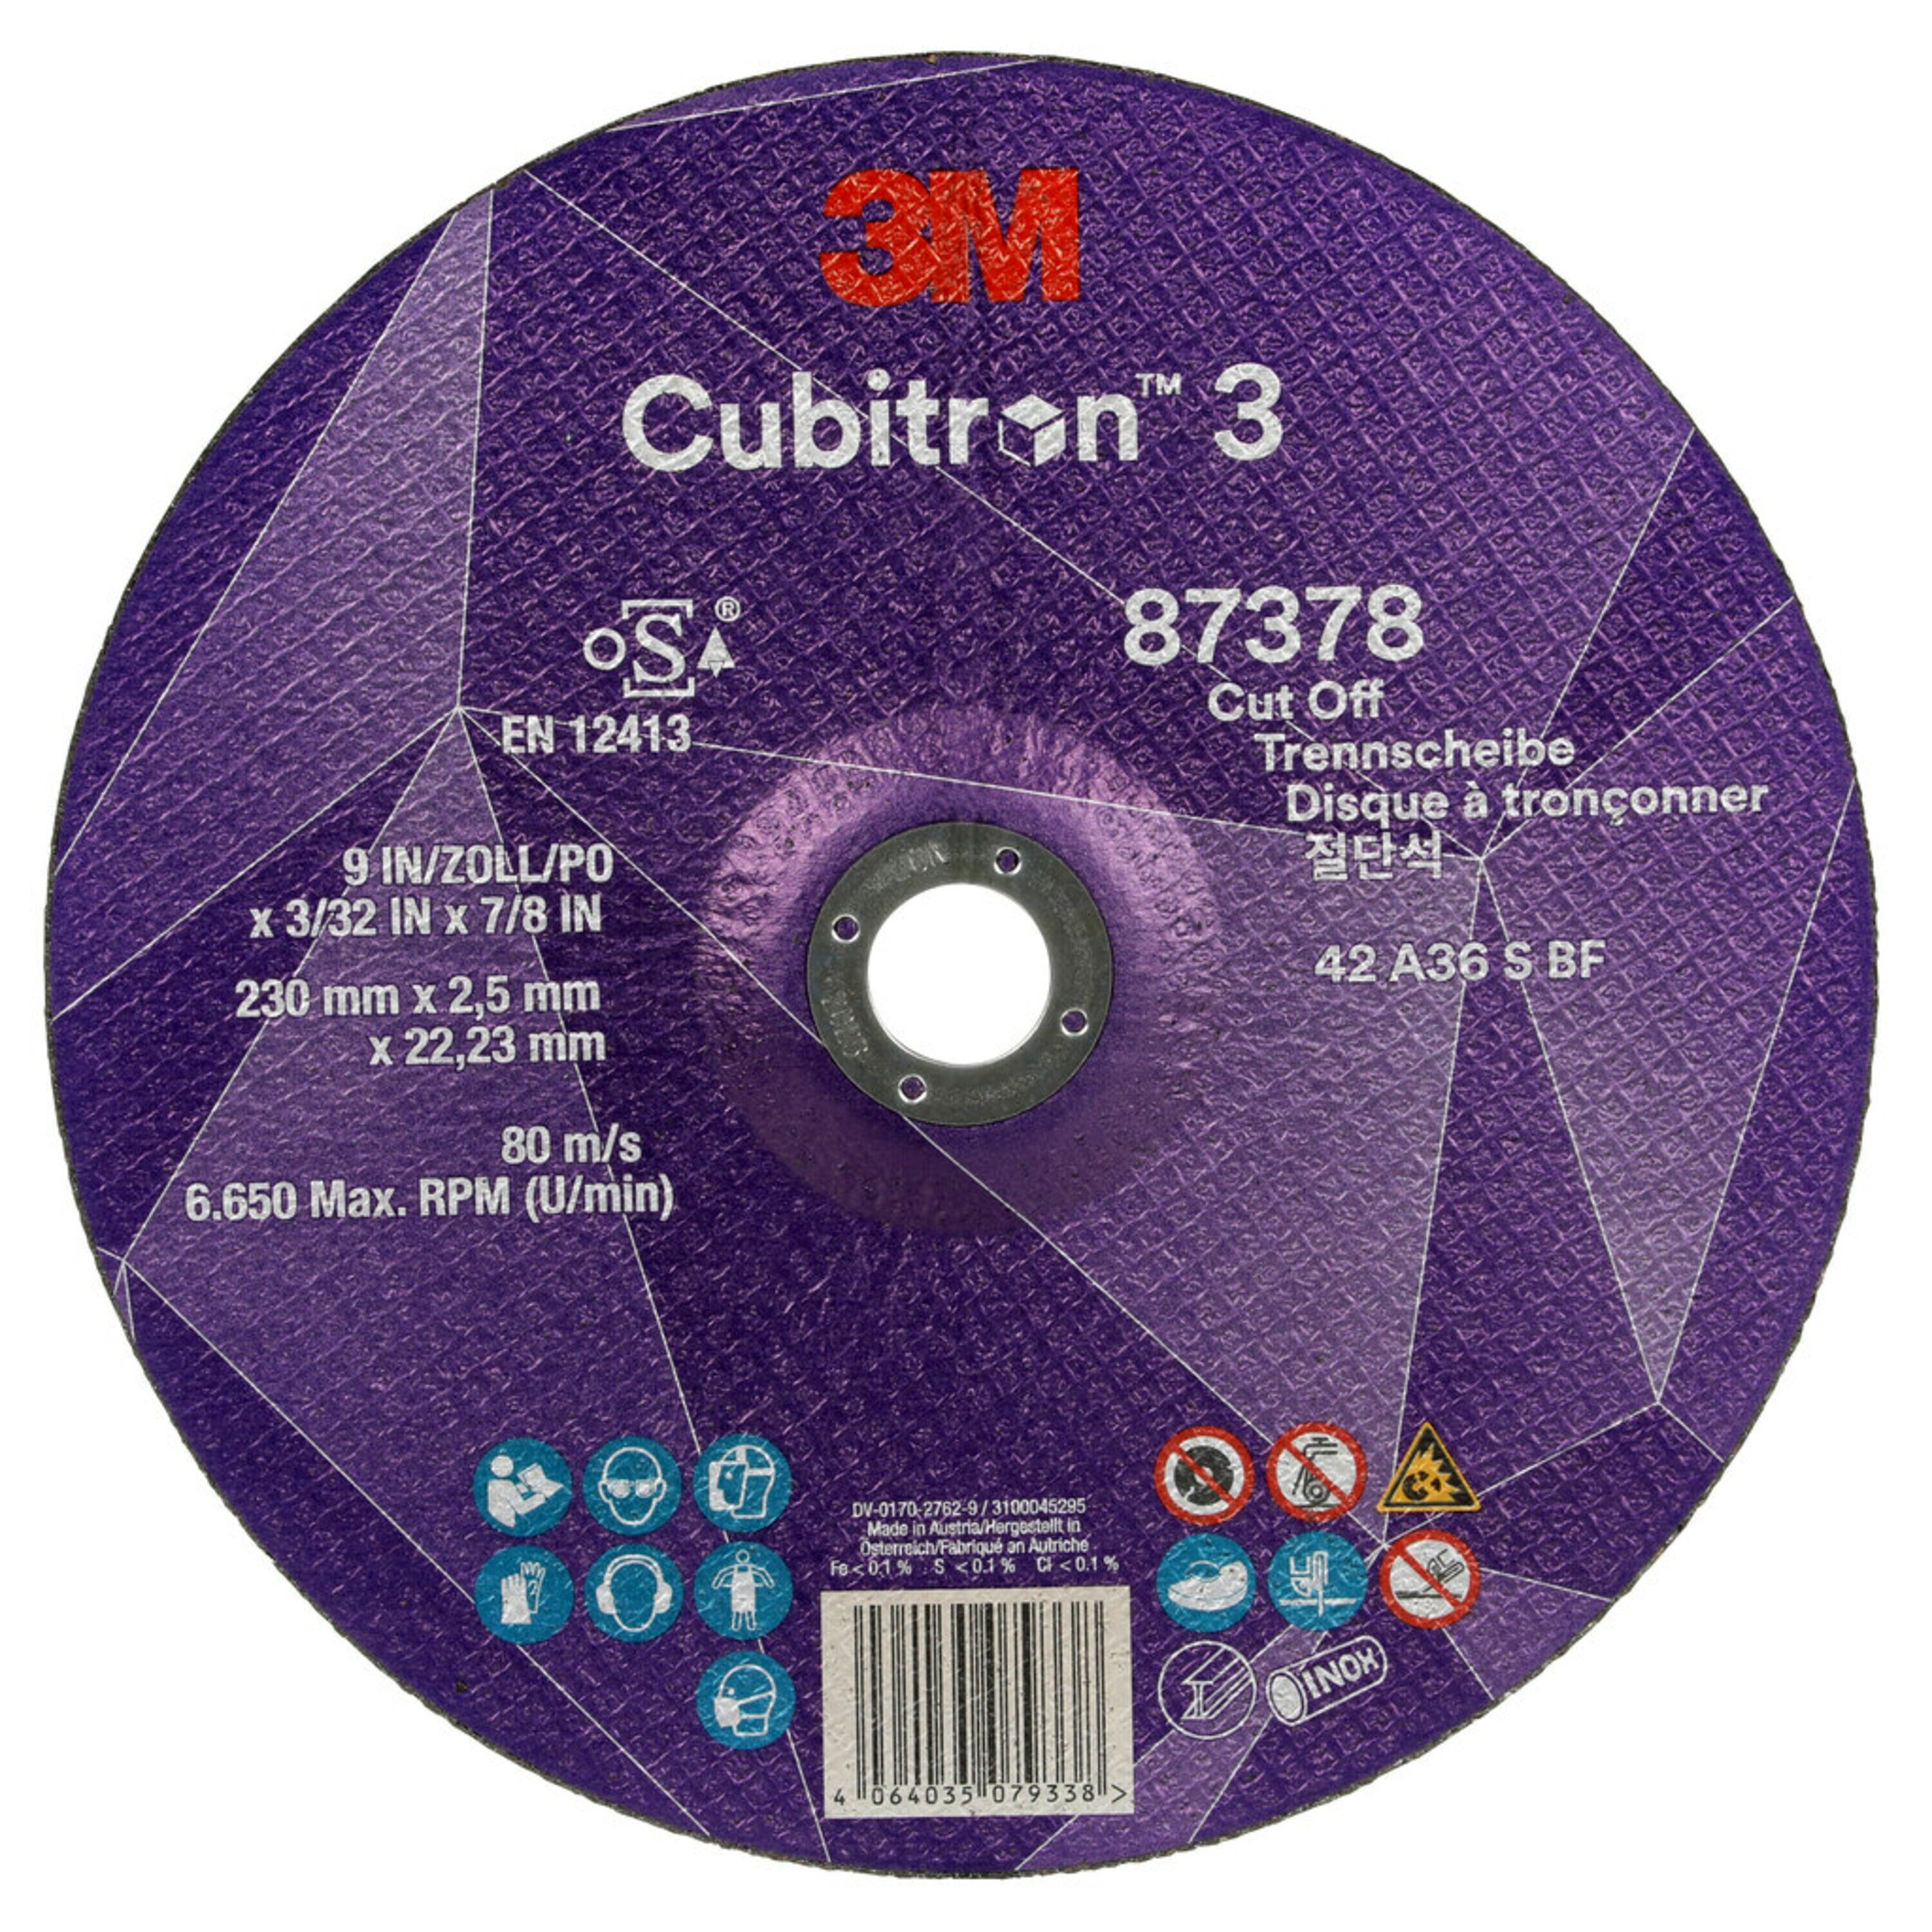 3M Cubitron 3 Trennscheibe, 230 mm, 2,5 mm, 22,23 mm, 36+, Typ 42 #87378